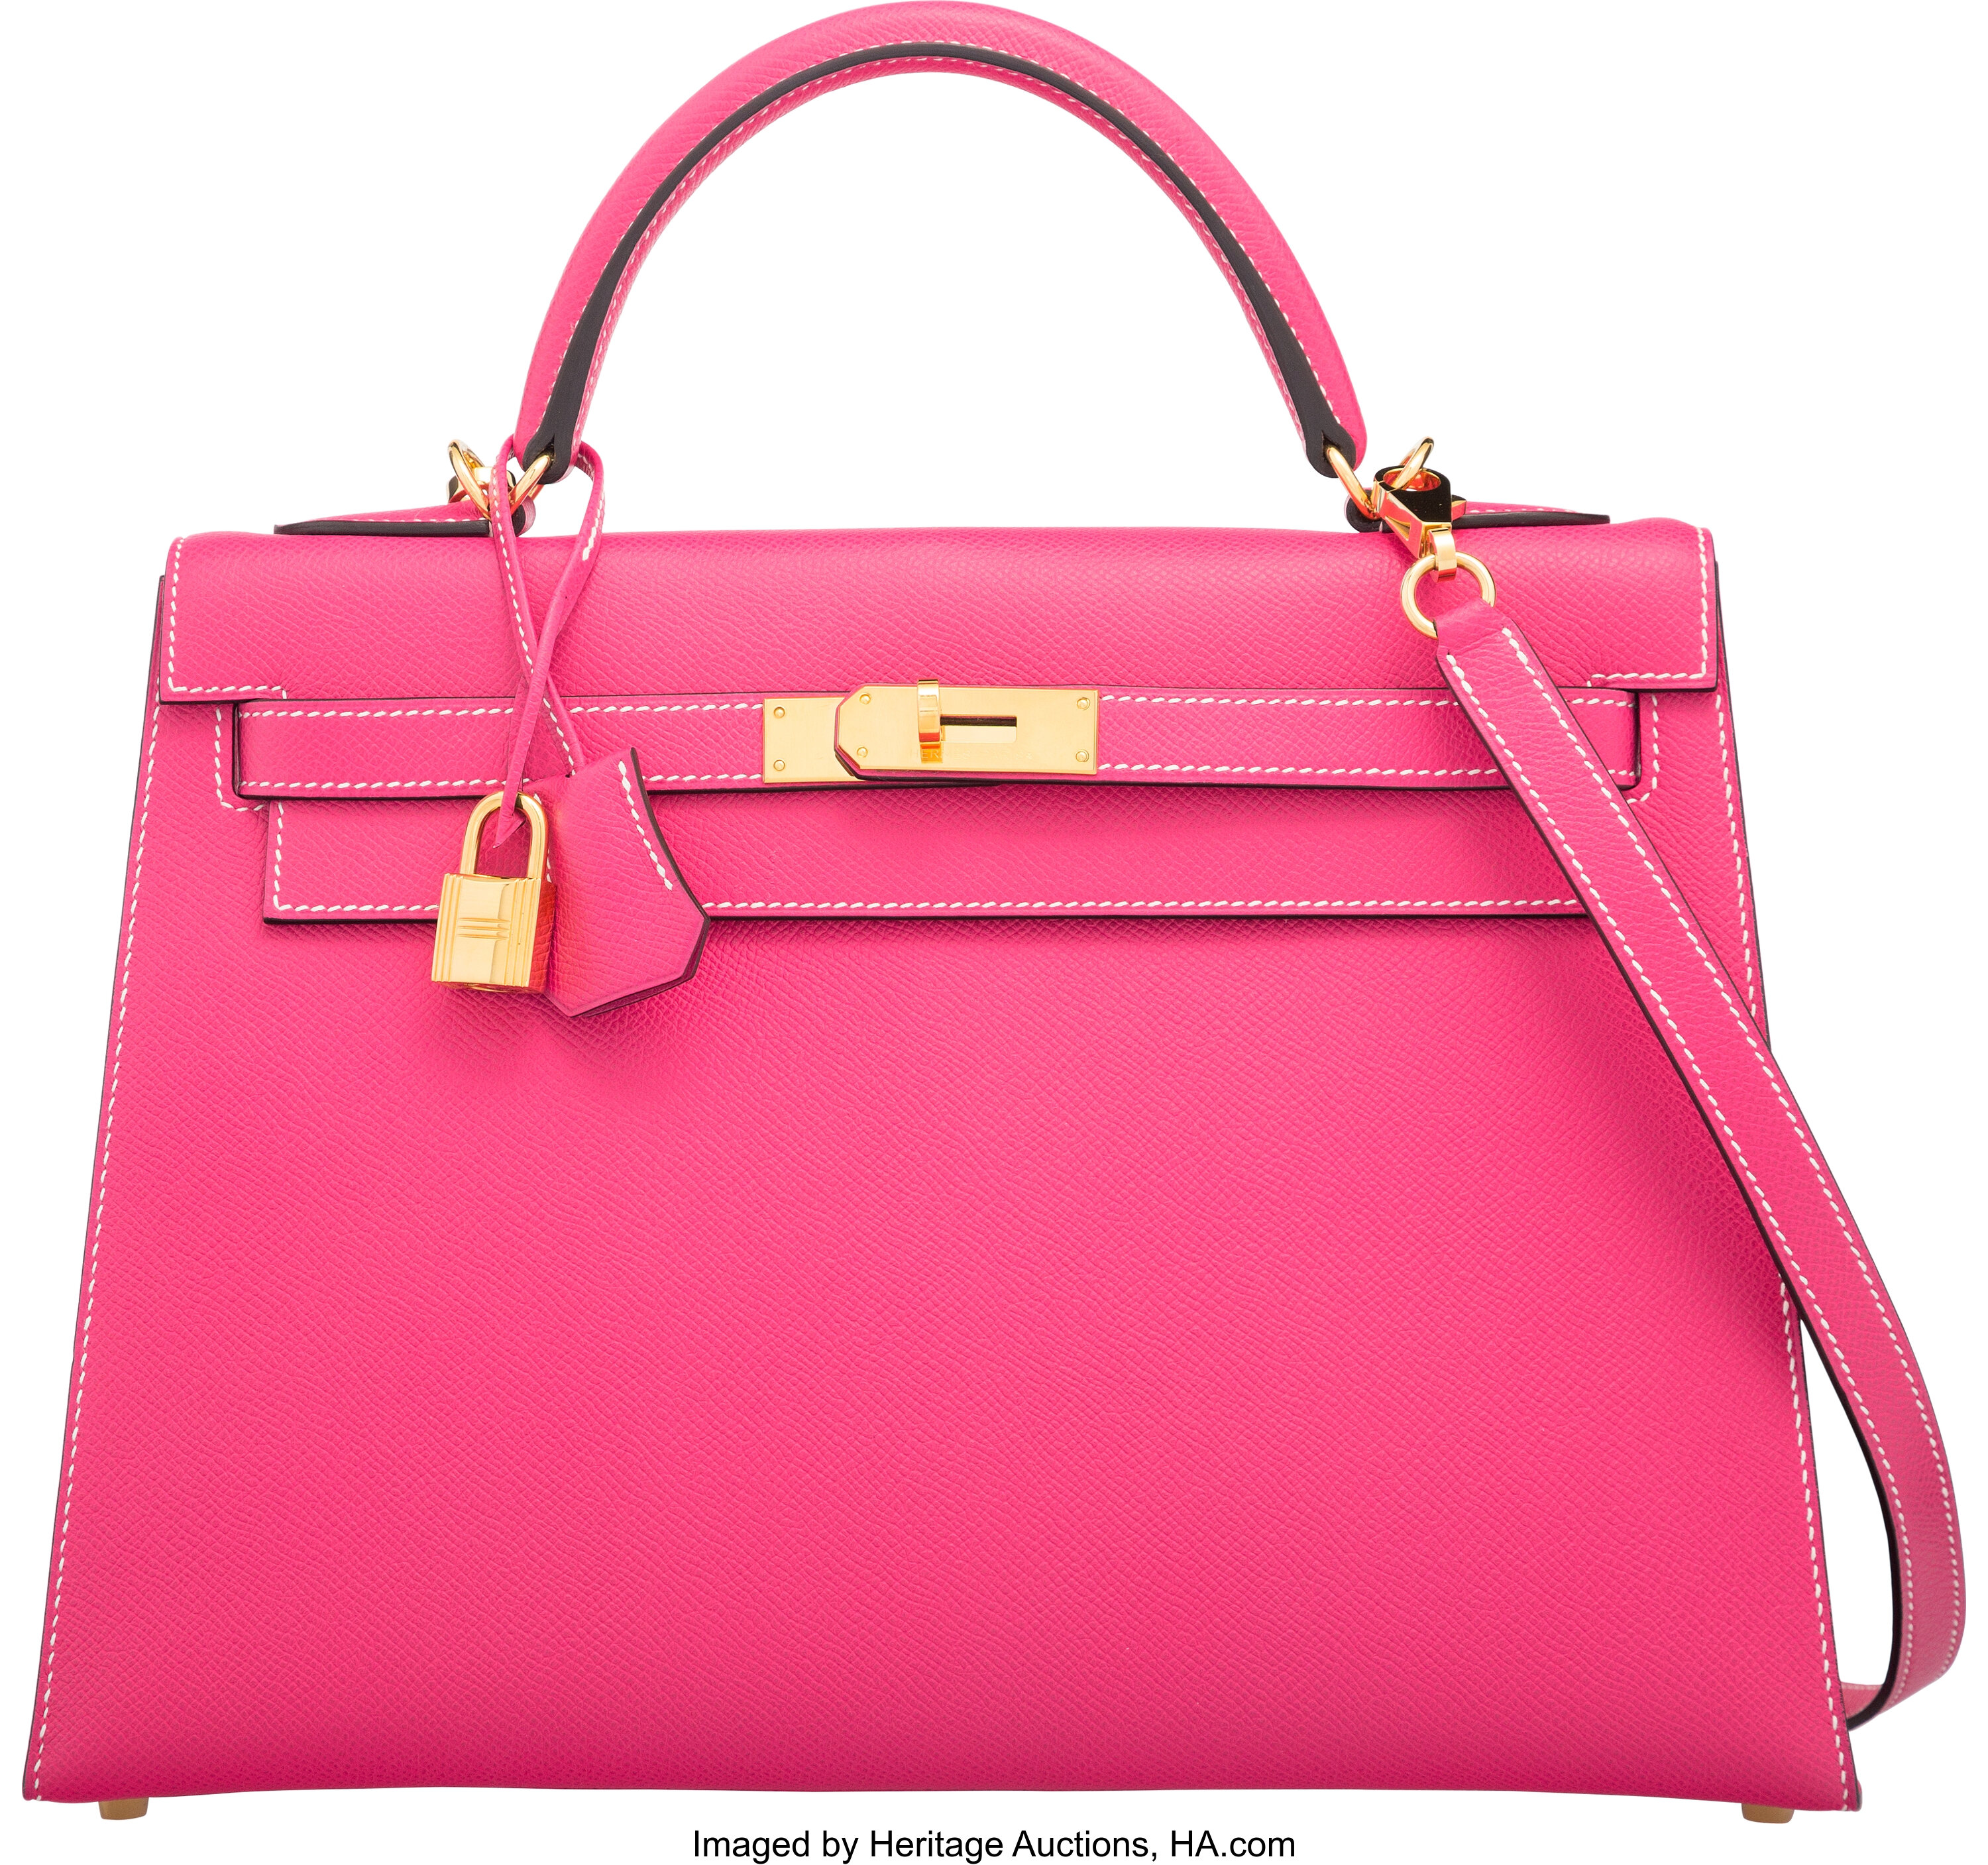 Sold at Auction: Hermes Birkin 30 Bag, Rose Pourpre Togo Leather, Palladium  Hardware